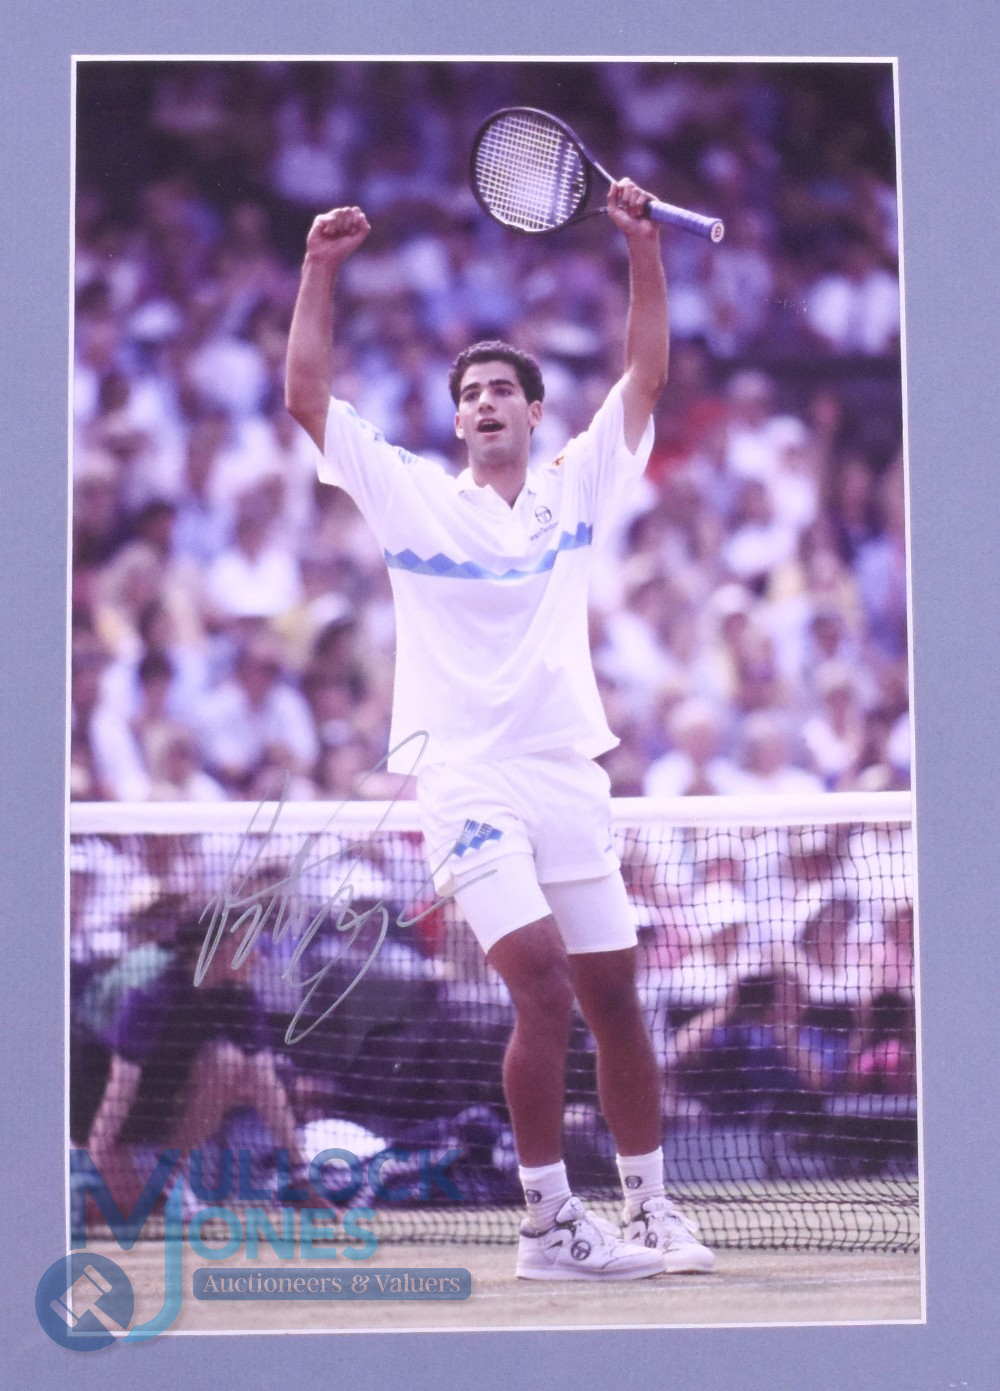 Tennis - Pete Sampras Autographed Photograph. Pete Sampras (born August 12, 1971) is an American